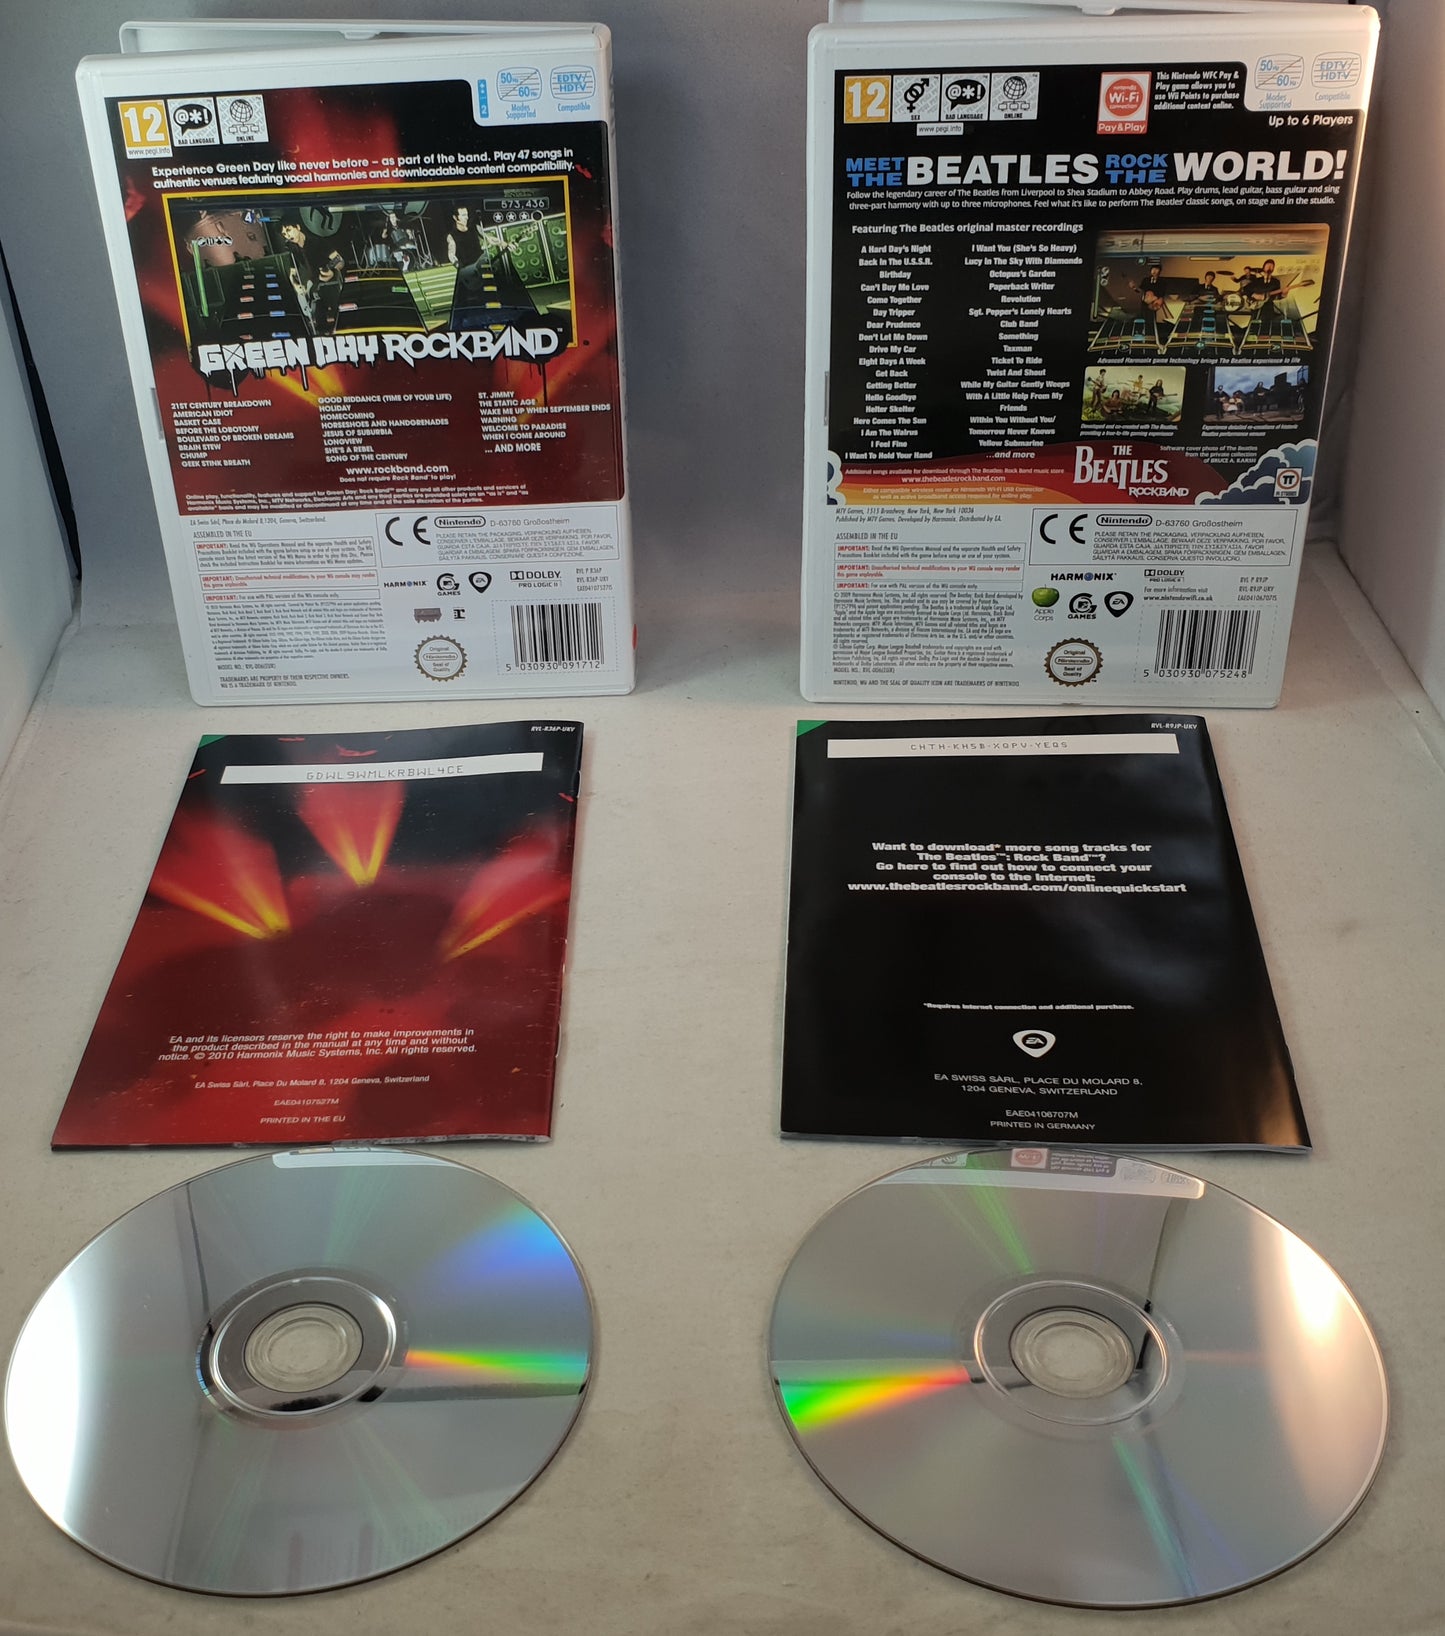 Green Day & Beatles Rock Band Nintendo Wii Game Bundle